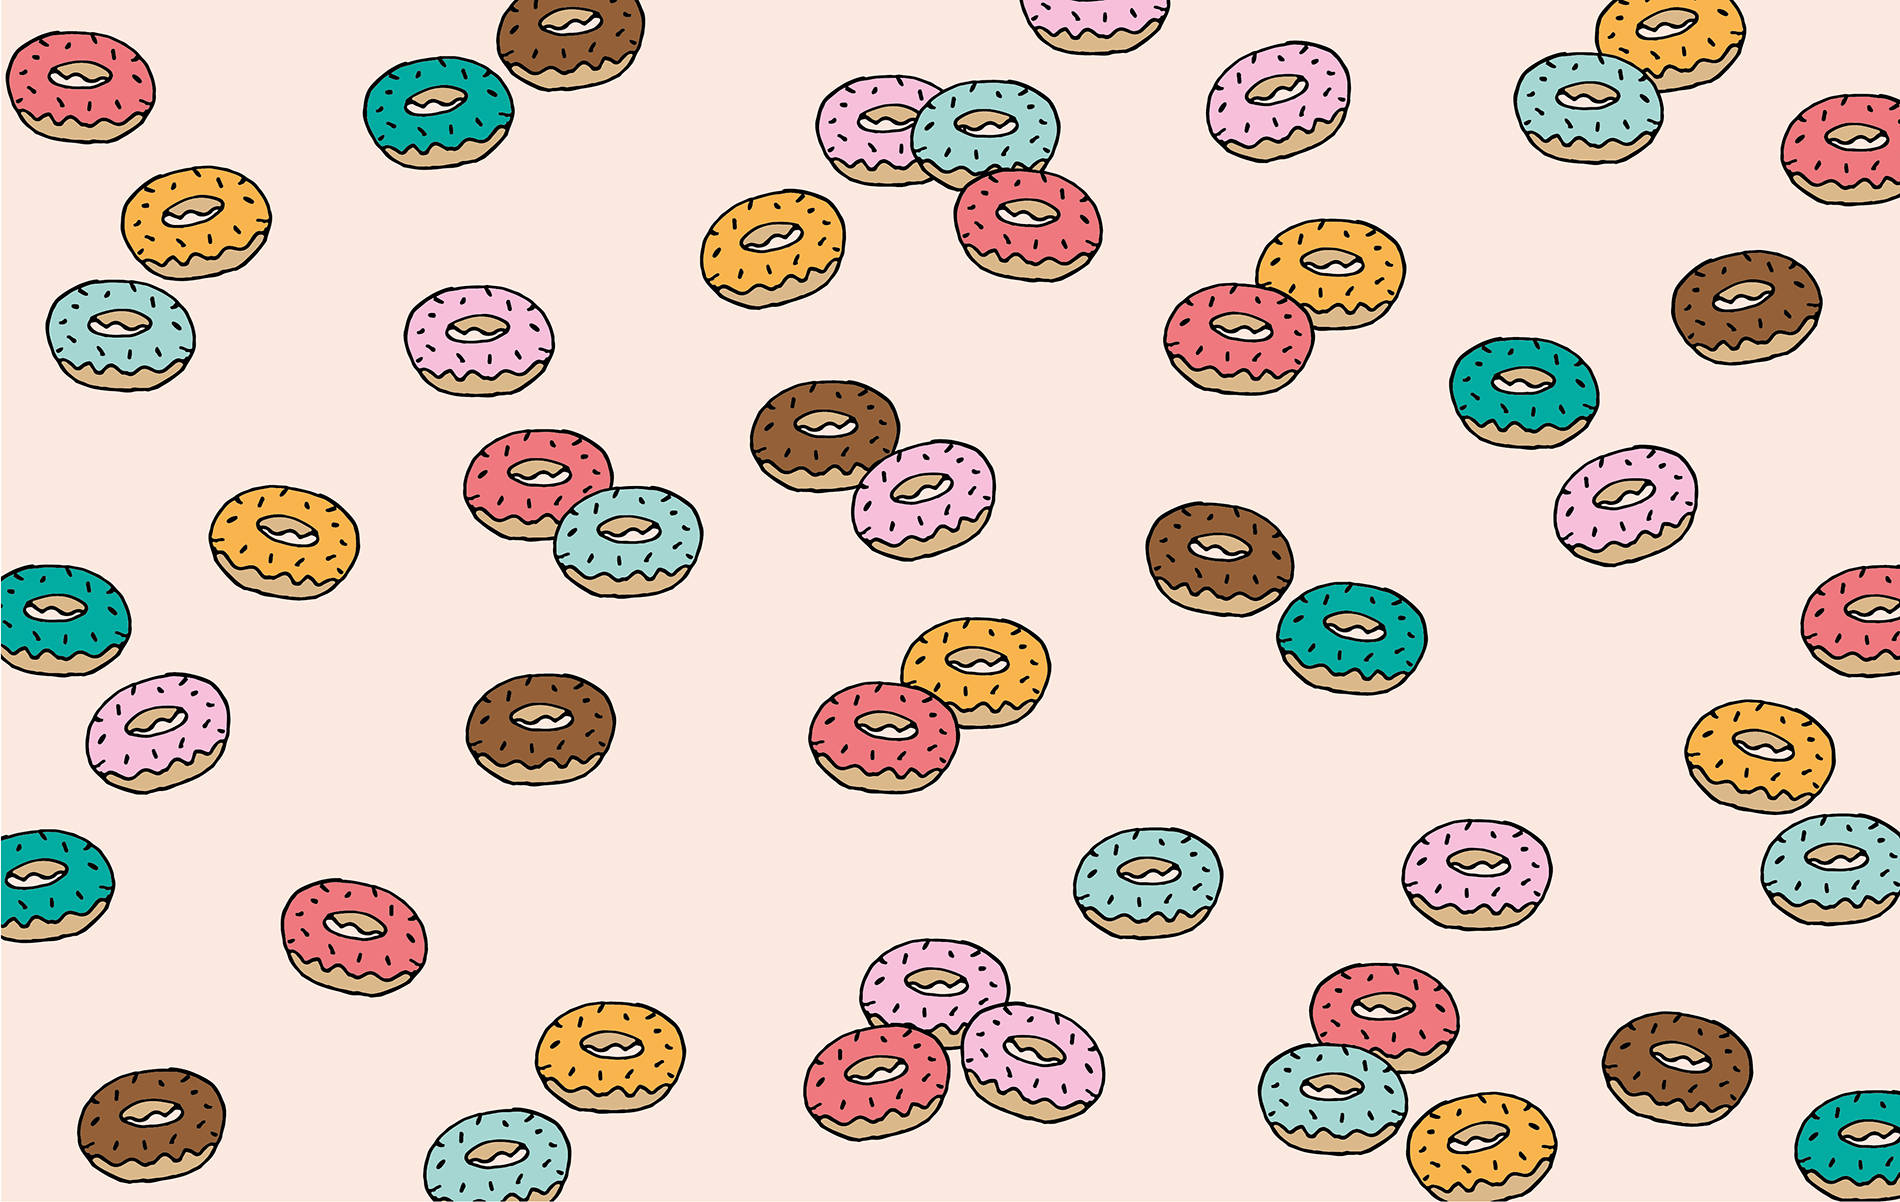 Scattered Glazed Donuts Wallpaper